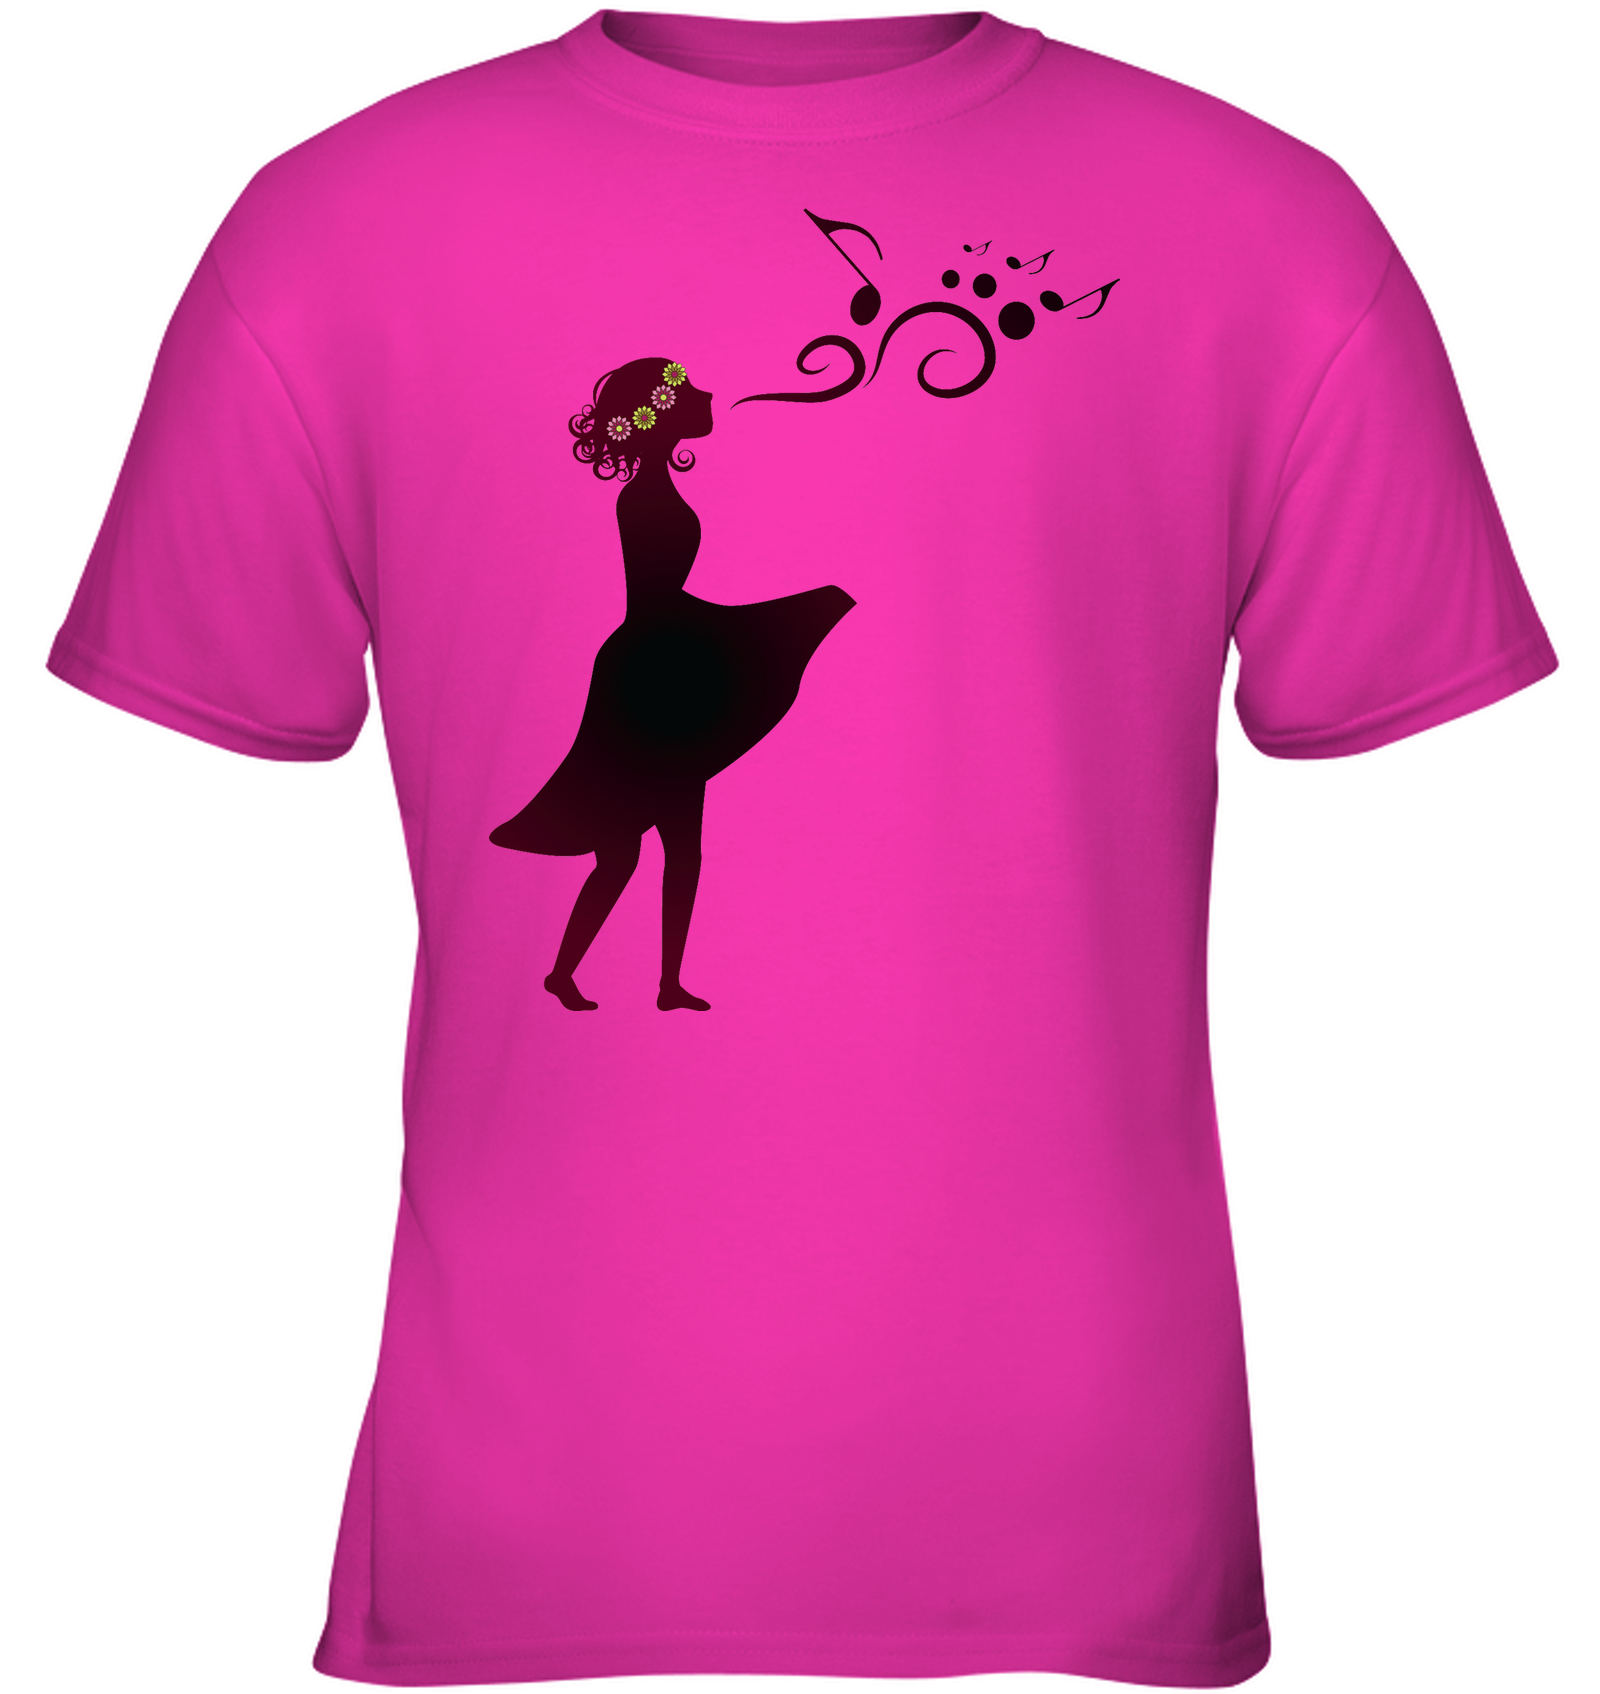 Girl Singing Silhouette - Gildan Youth Short Sleeve T-Shirt